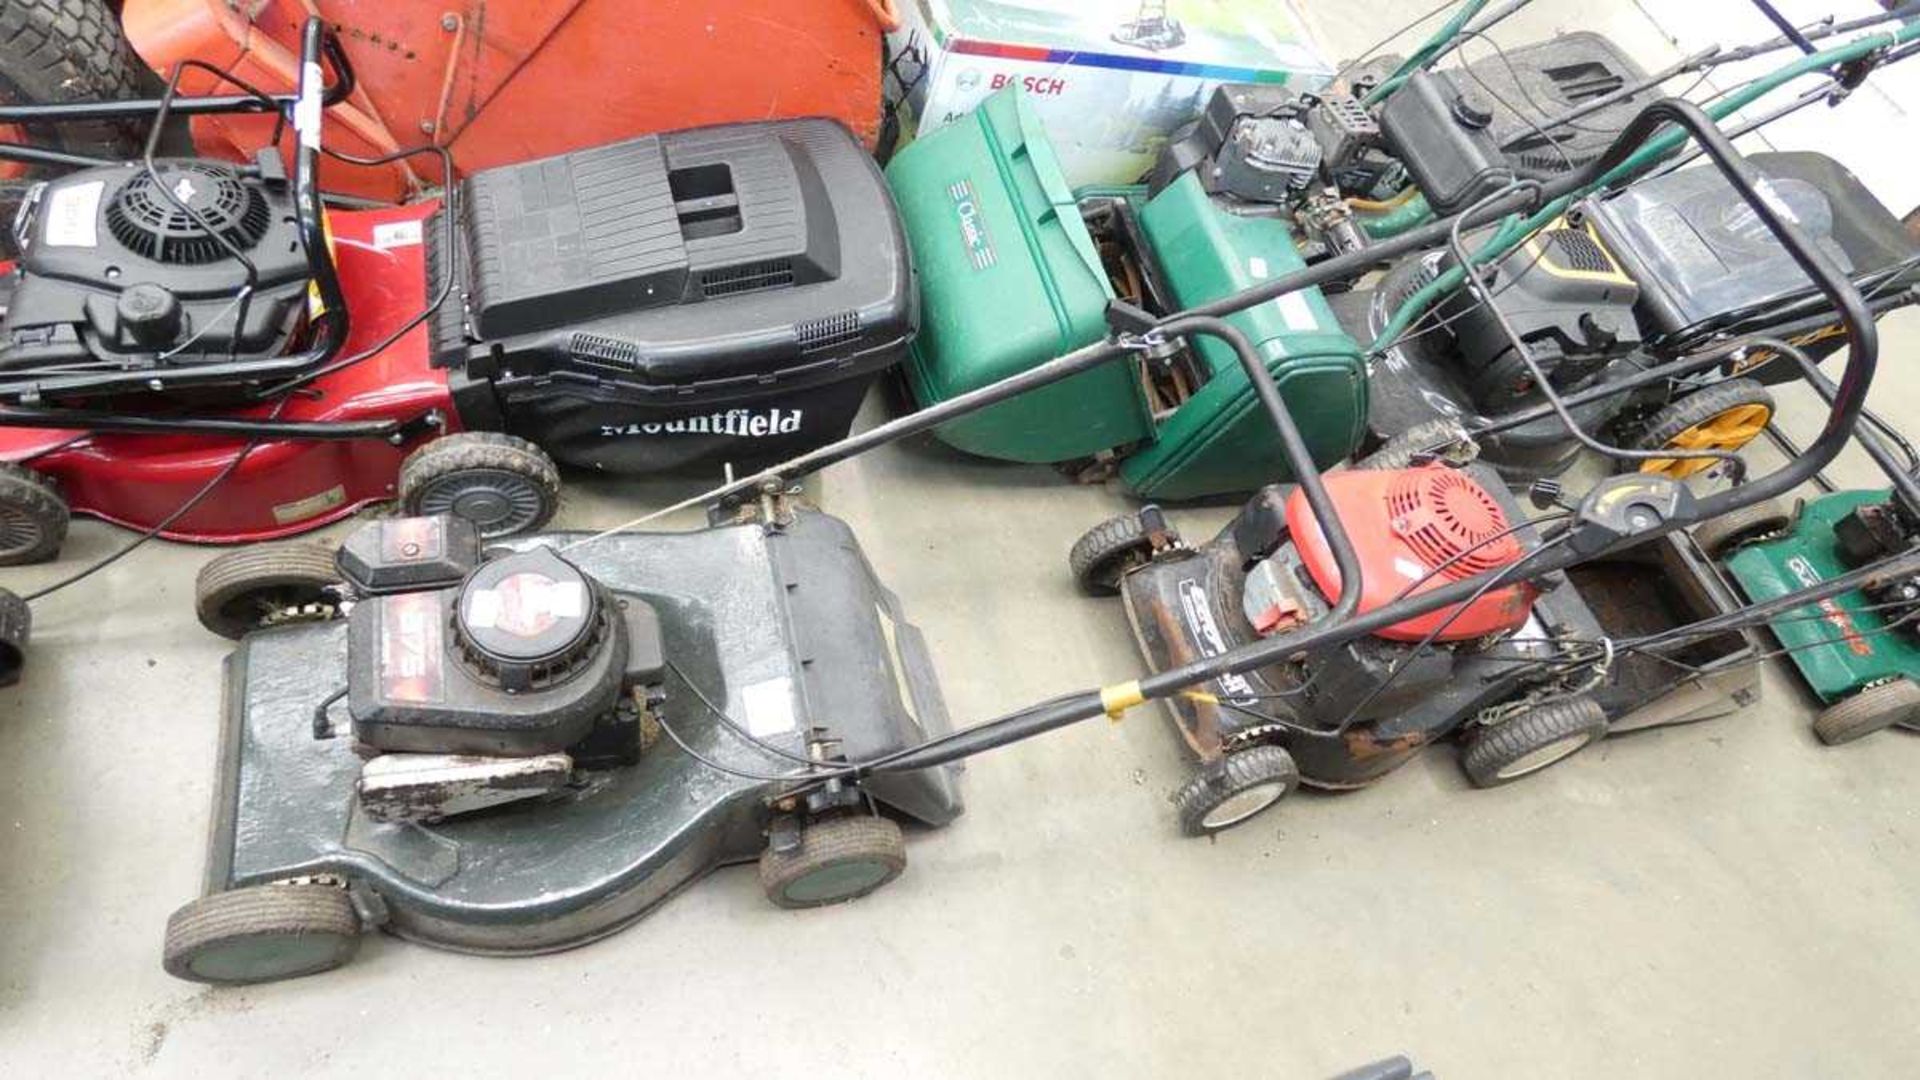 Petrol powered rotary lawn mower, no grass box